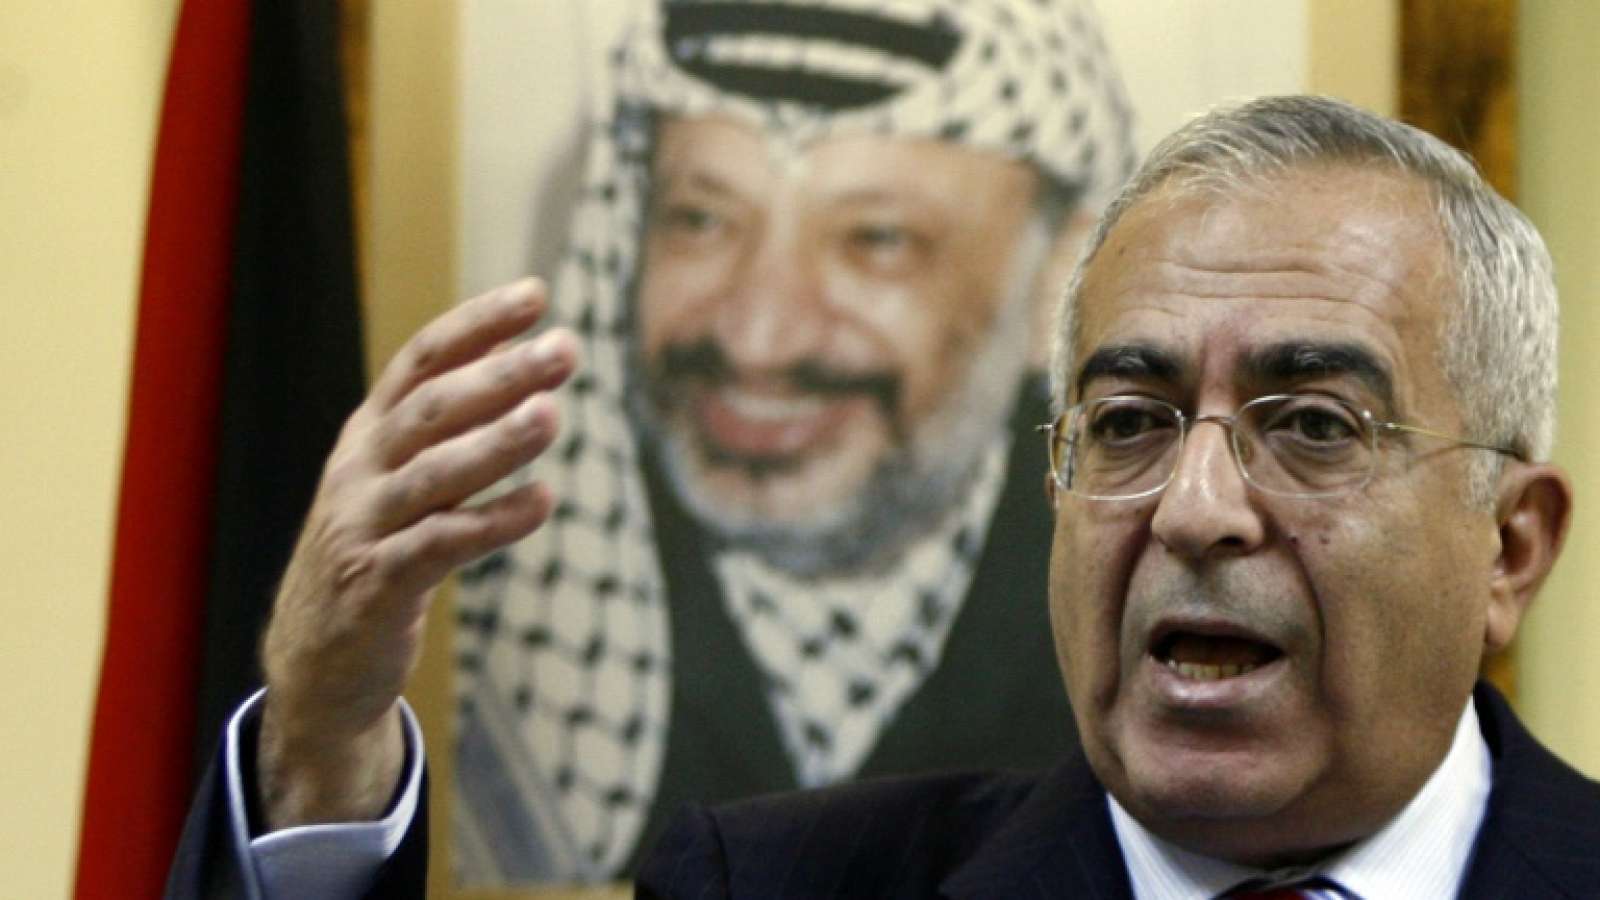 UN Chief Names Palestinian to Libya Post, Risking U.S. Objection